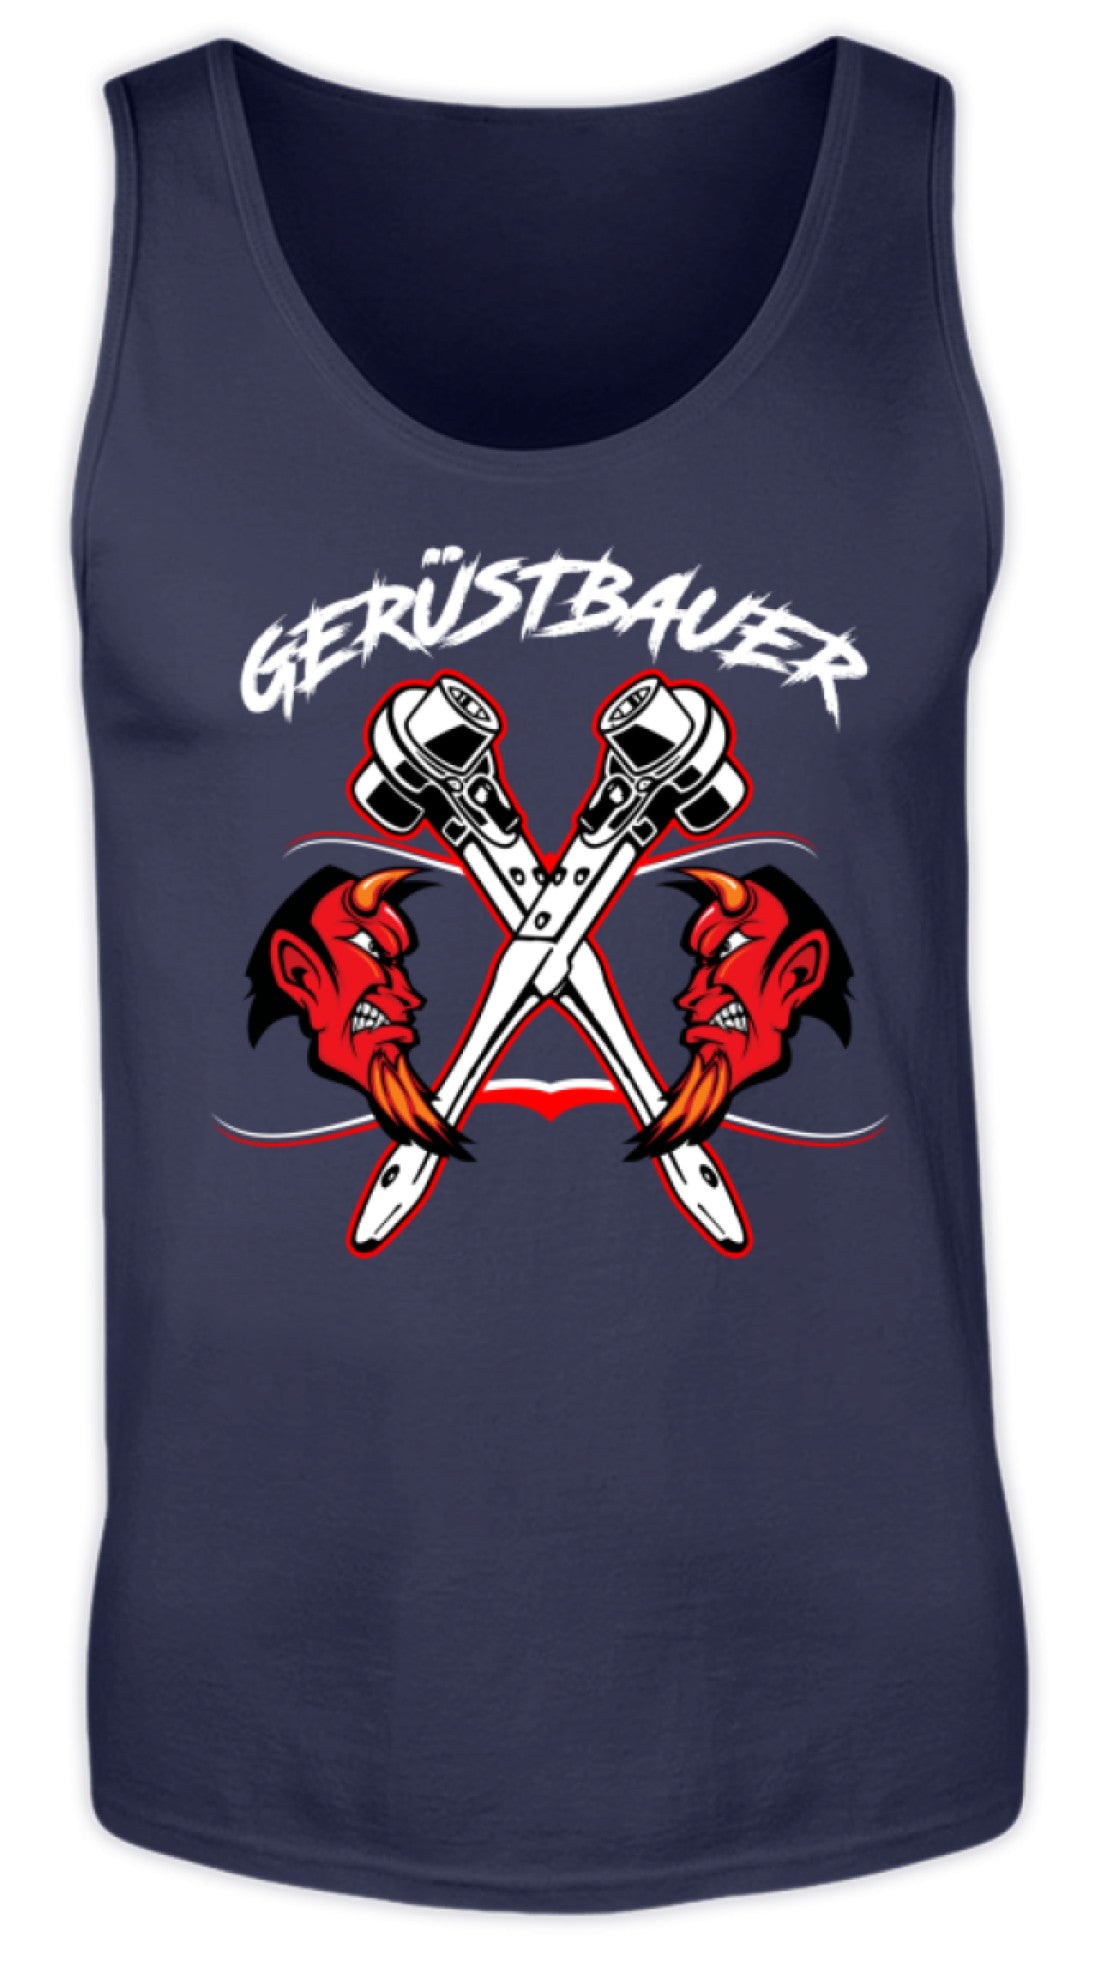 Gerüstbauer / Devil  - Herren Tanktop €19.95 Gerüstbauer - Shop >>